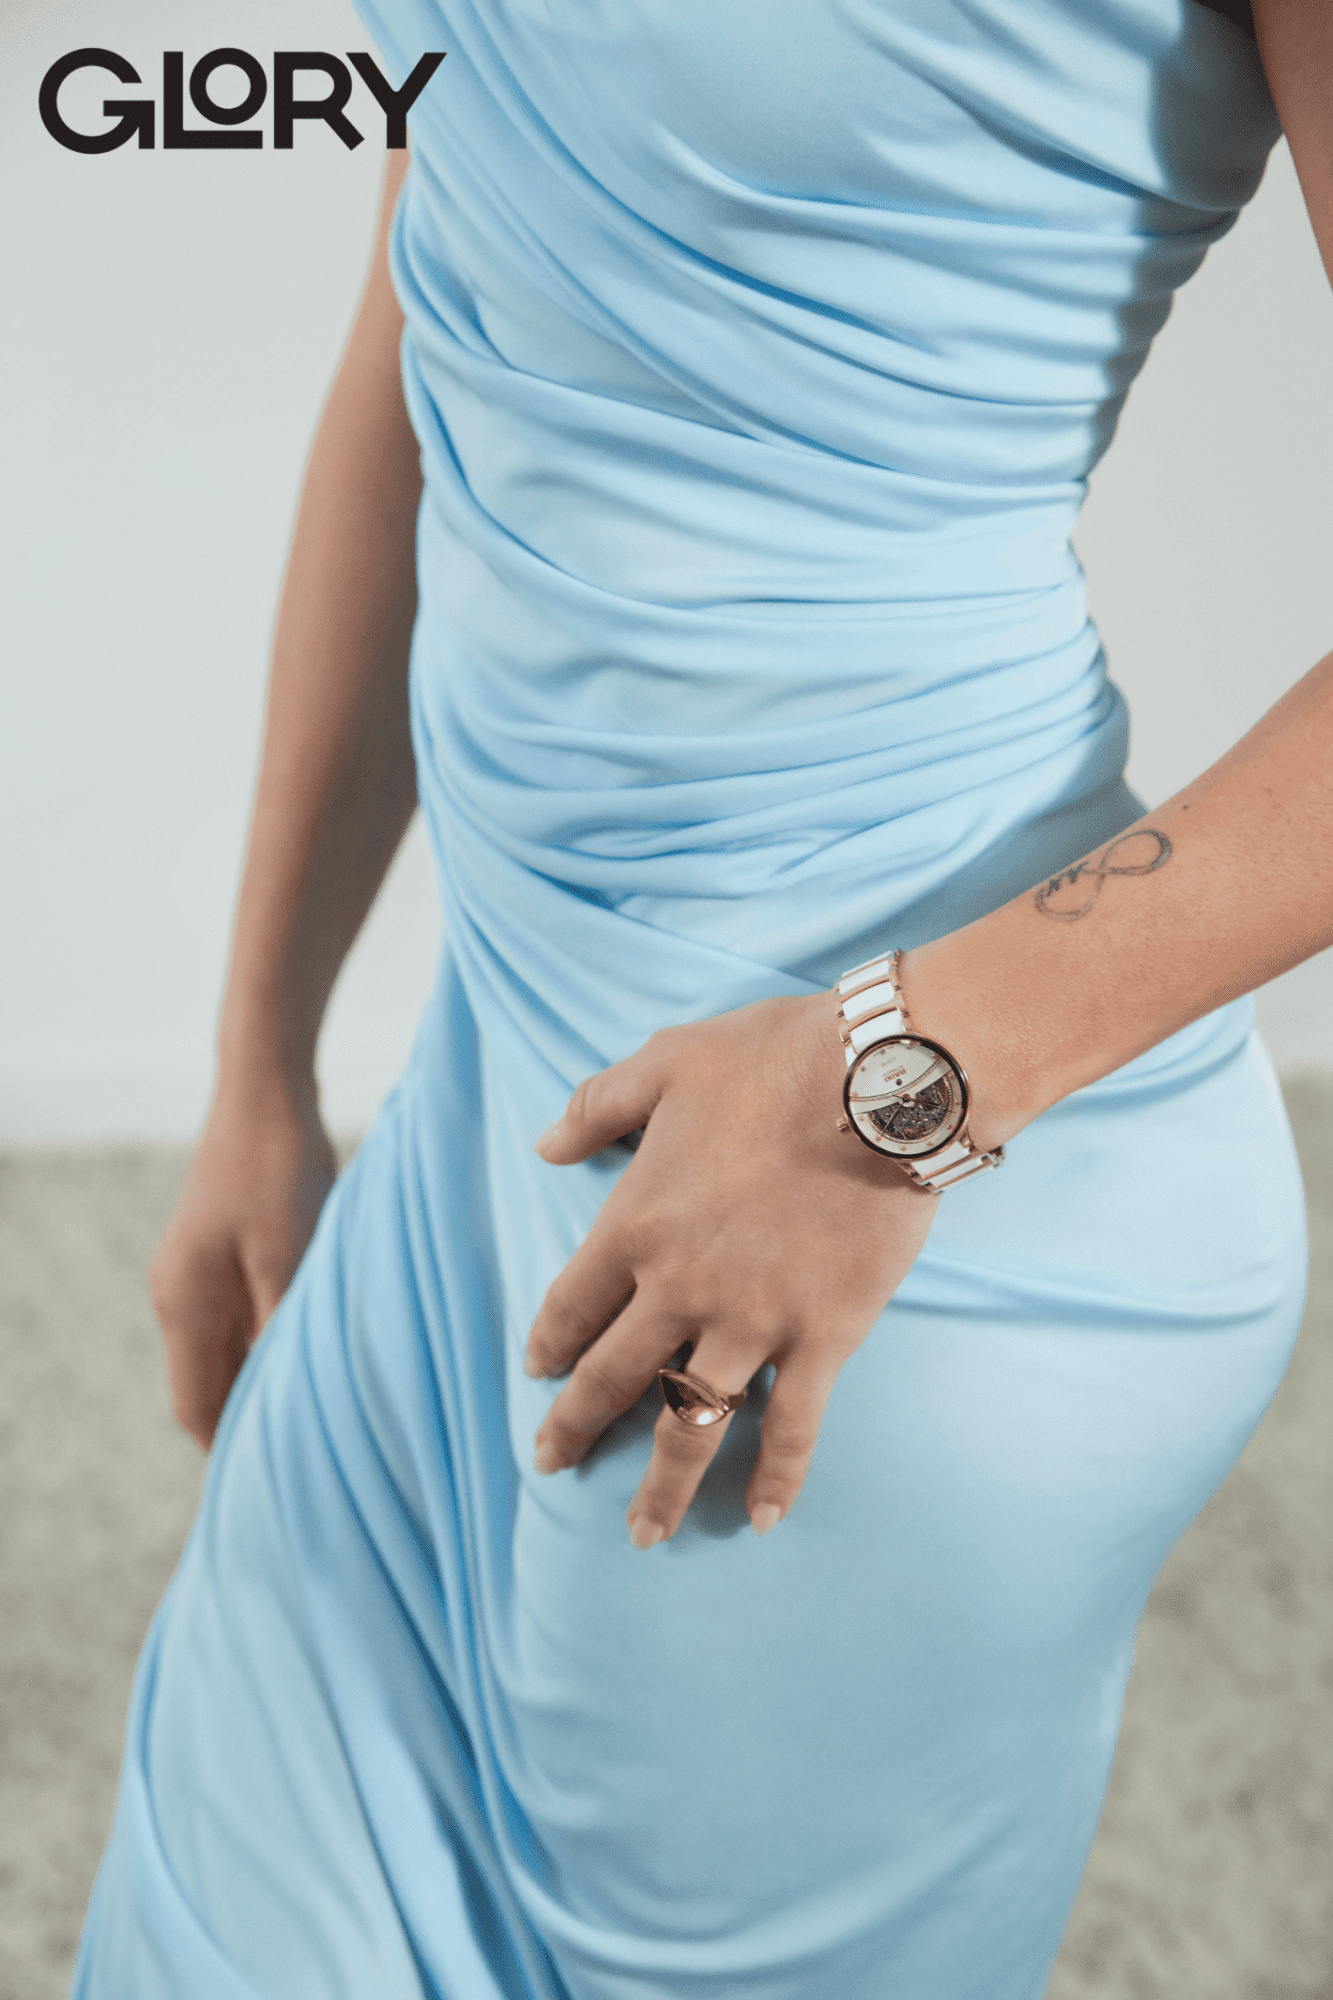 Light blue dress on a woman wearing a white Rado watch.